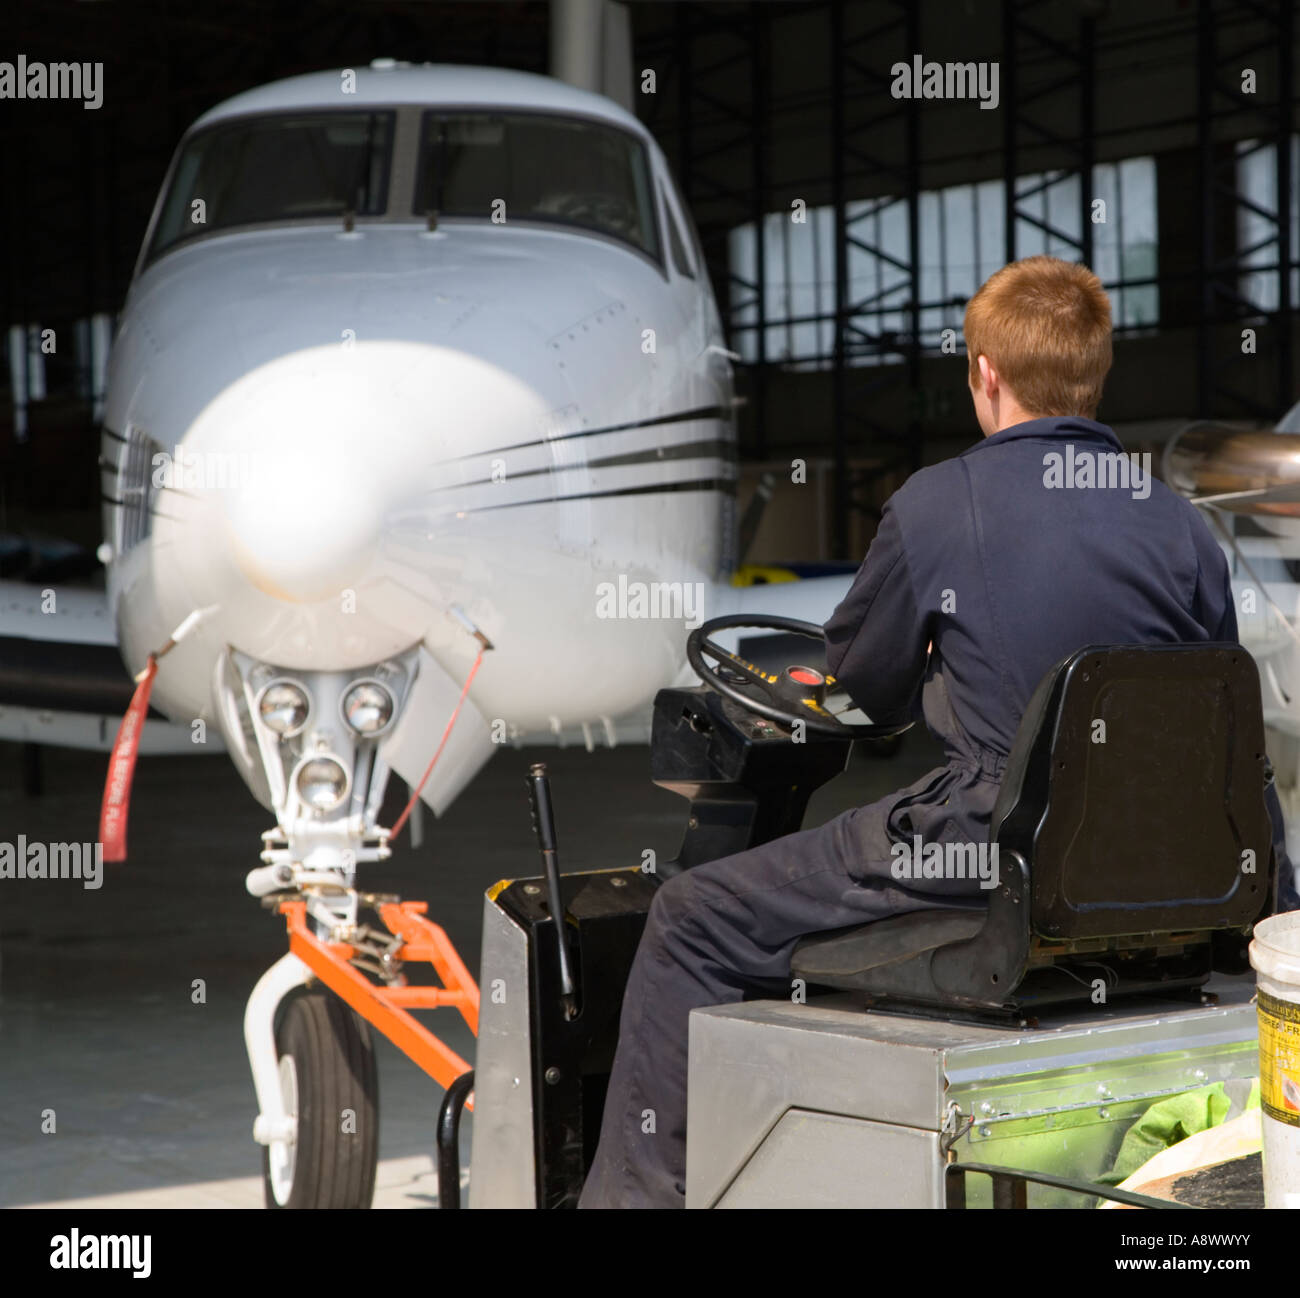 Young man towing a King Air aircraft from the hangar. UK. Stock Photo